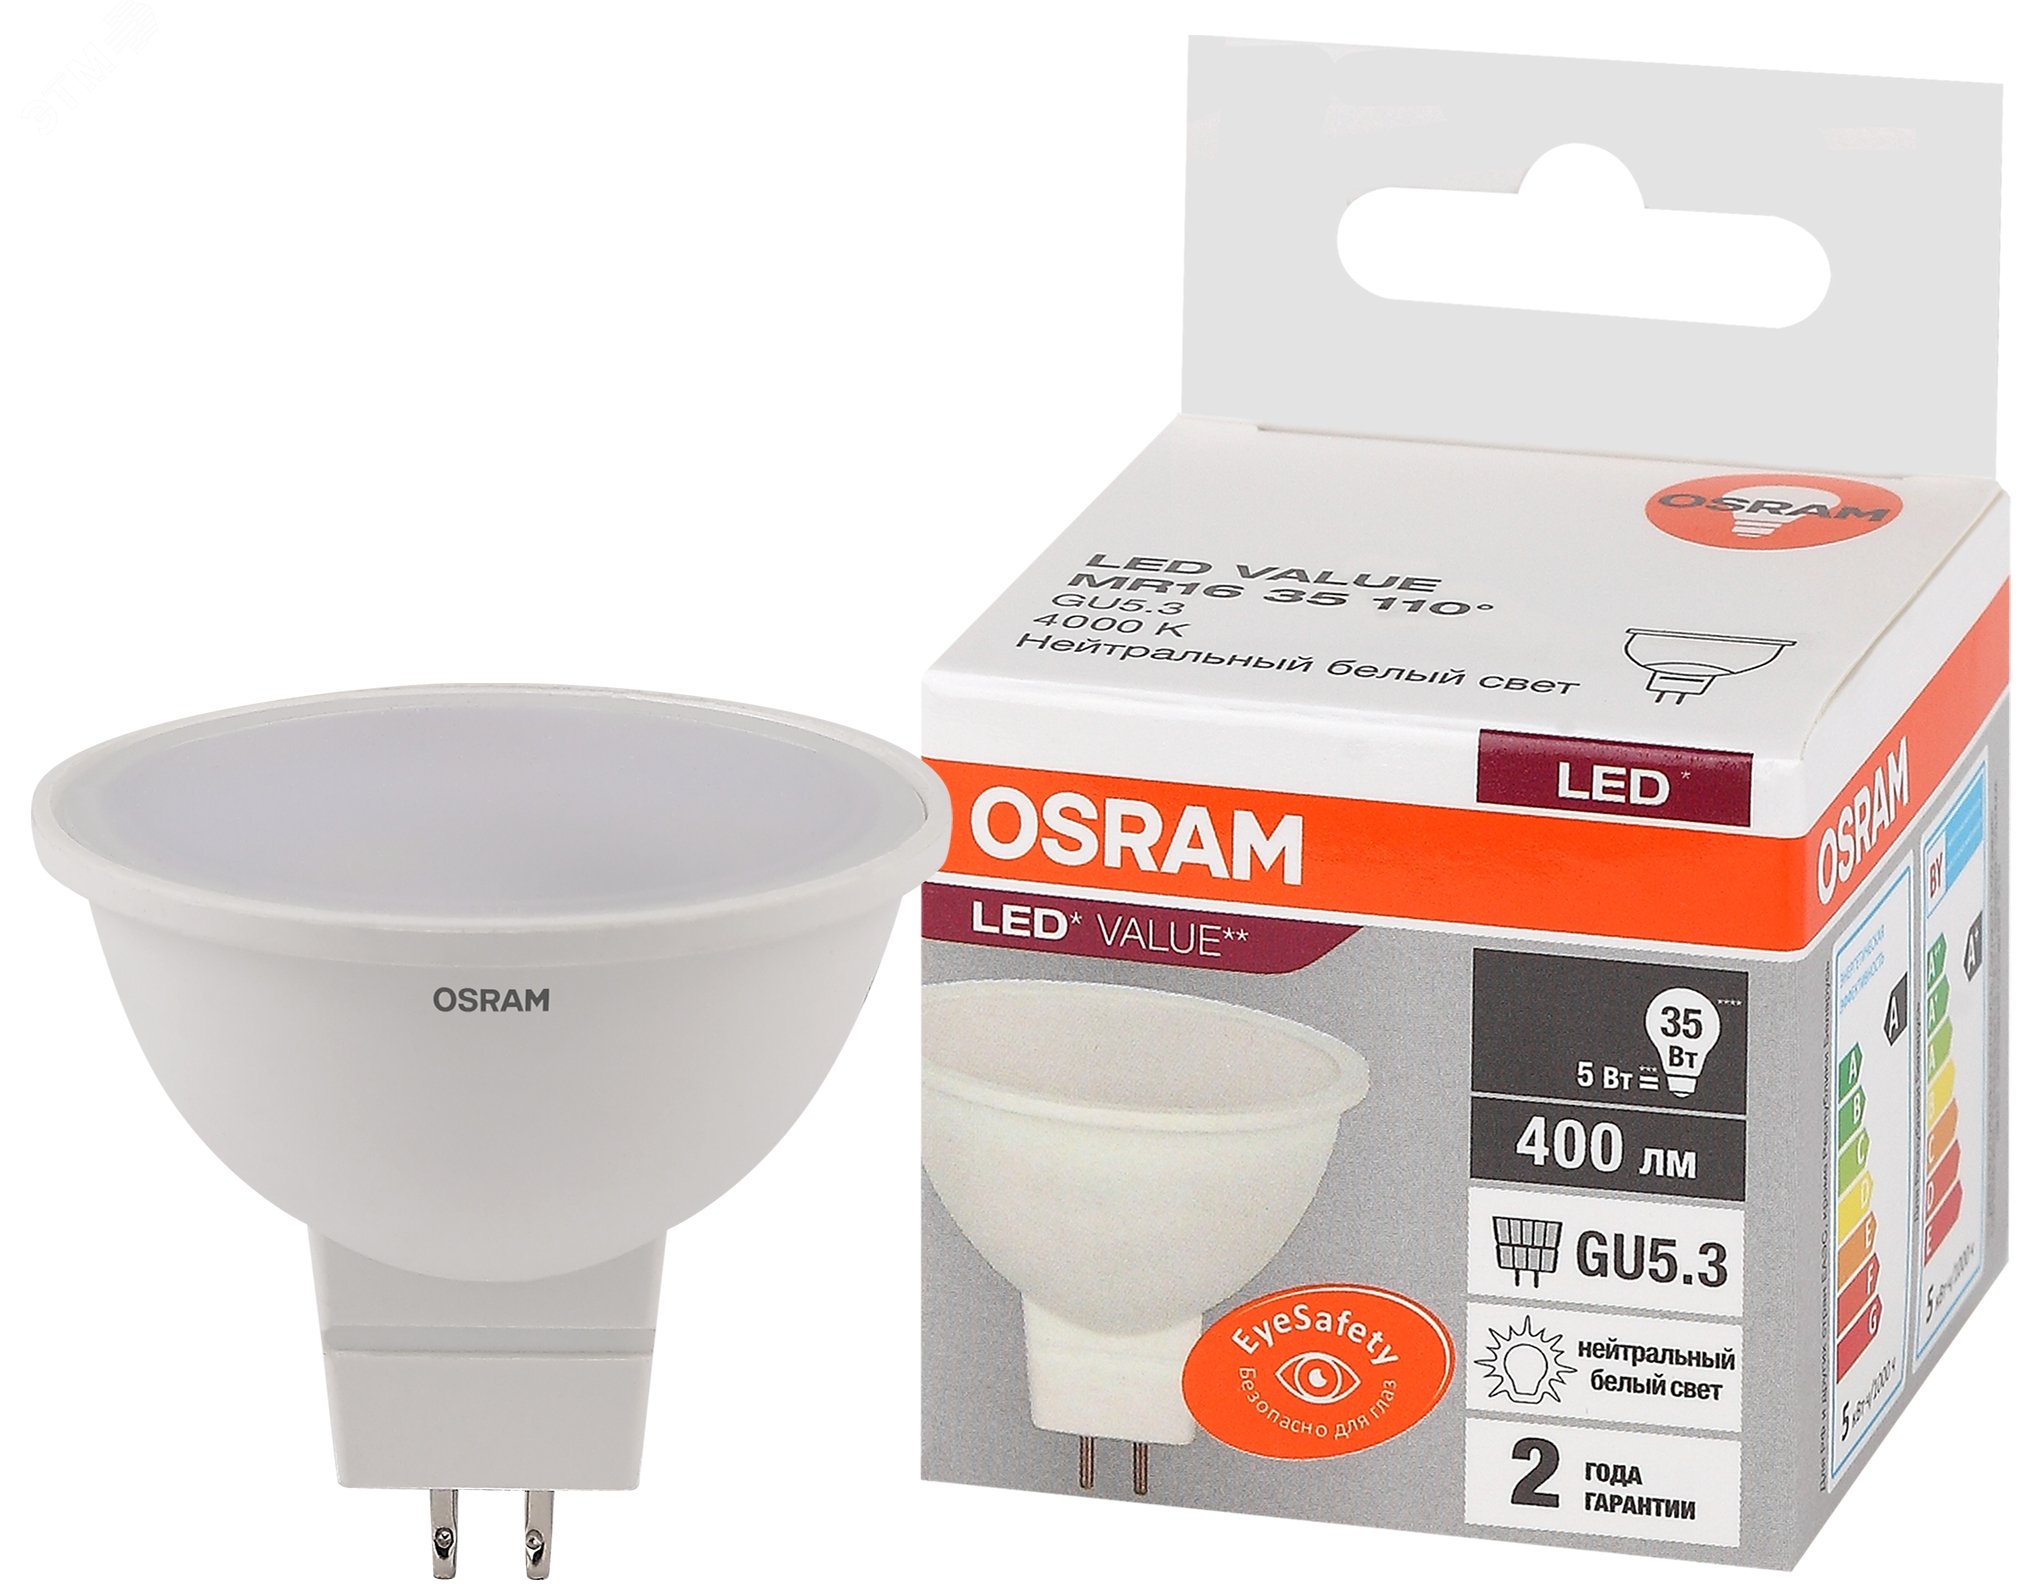 Лампа светодиодная LED 5 Вт GU5.3 4000К 400Лм спот 220 В (замена 35Вт) OSRAM 4058075582422 LEDVANCE - превью 2